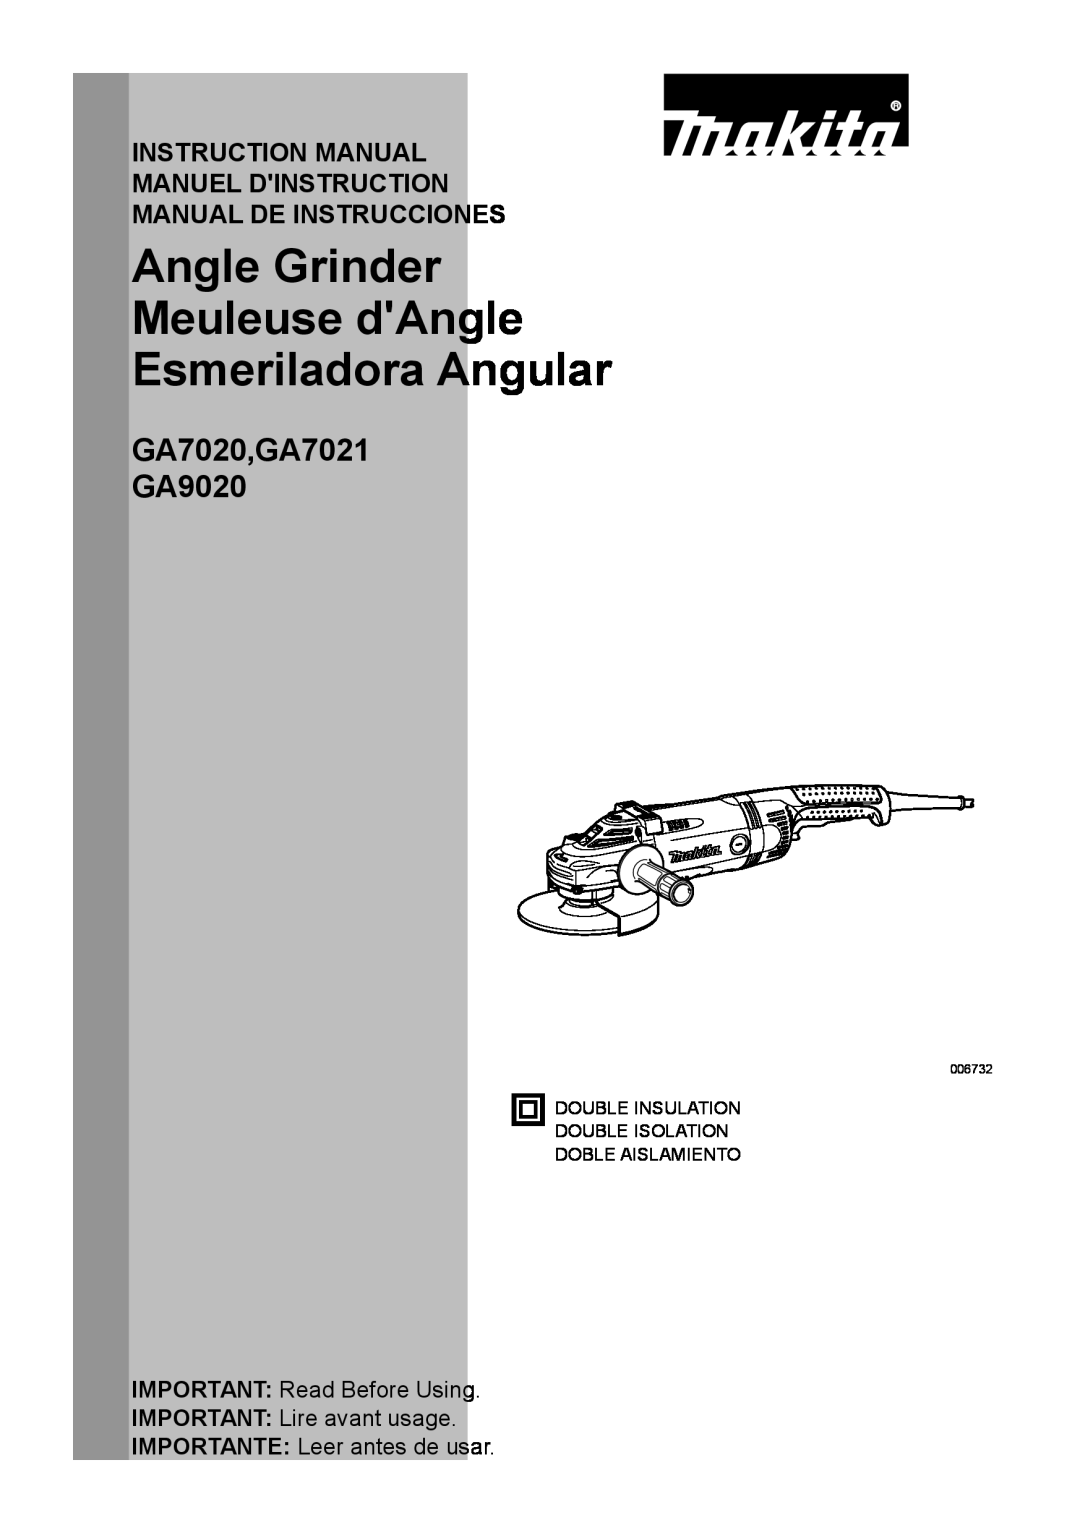 Makita instruction manual Angle Grinder Meuleuse dAngle Esmeriladora Angular, GA7020,GA7021 GA9020, 006732 